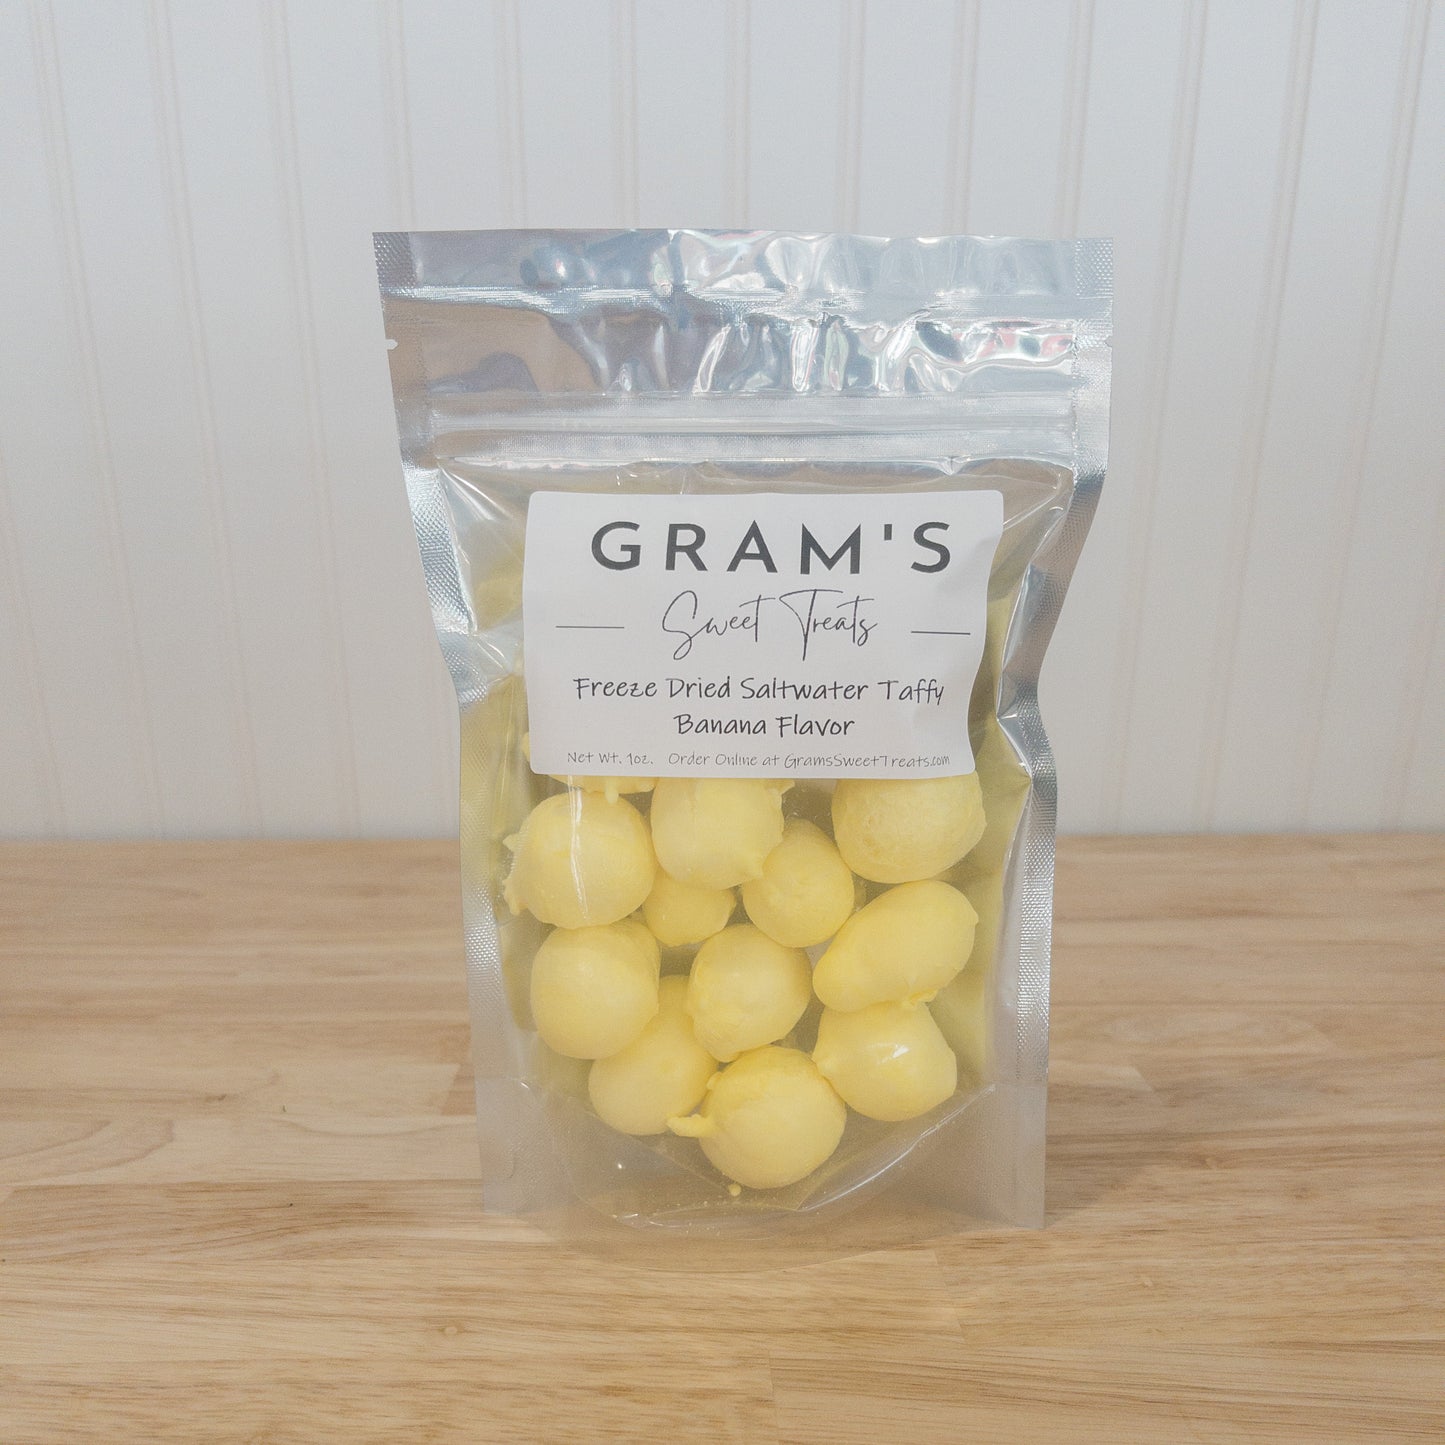 Gram's Sweet Treats- Freeze Dried Saltwater Taffy